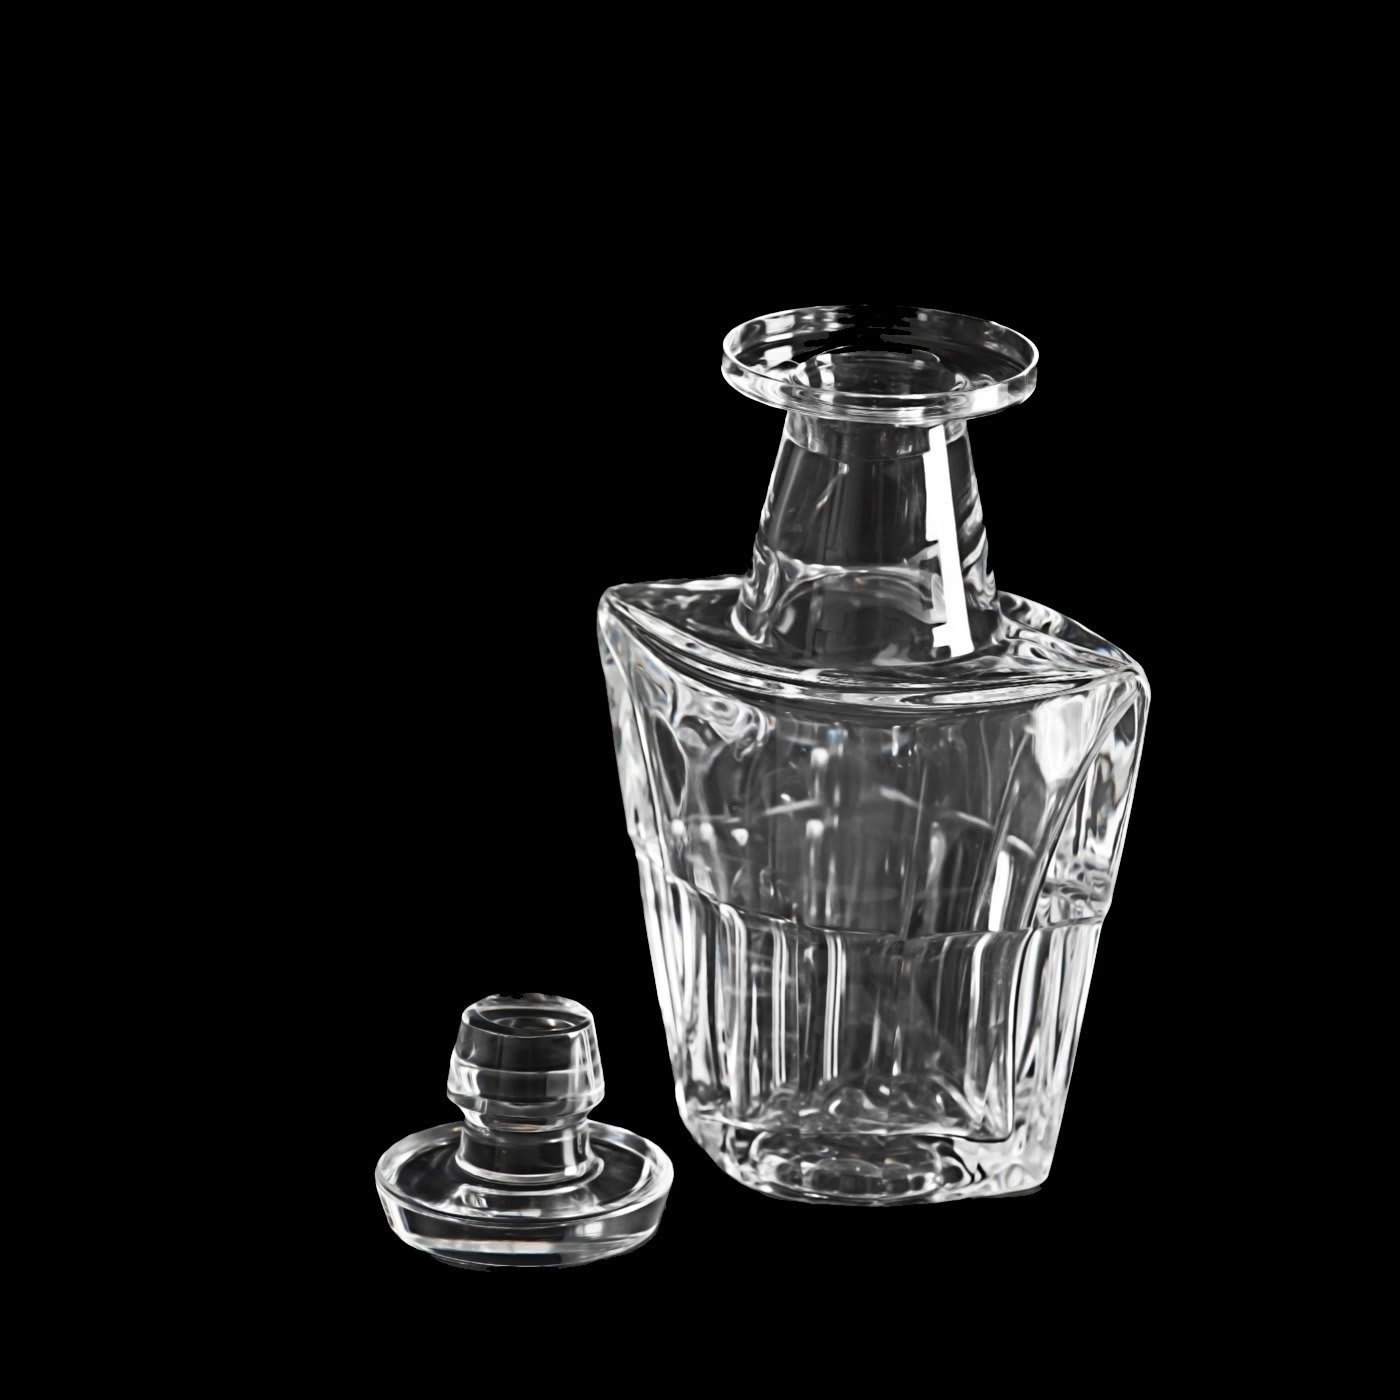 Le Corbusier Crystal Whisky Bottle - Cristalleria ColleVilca